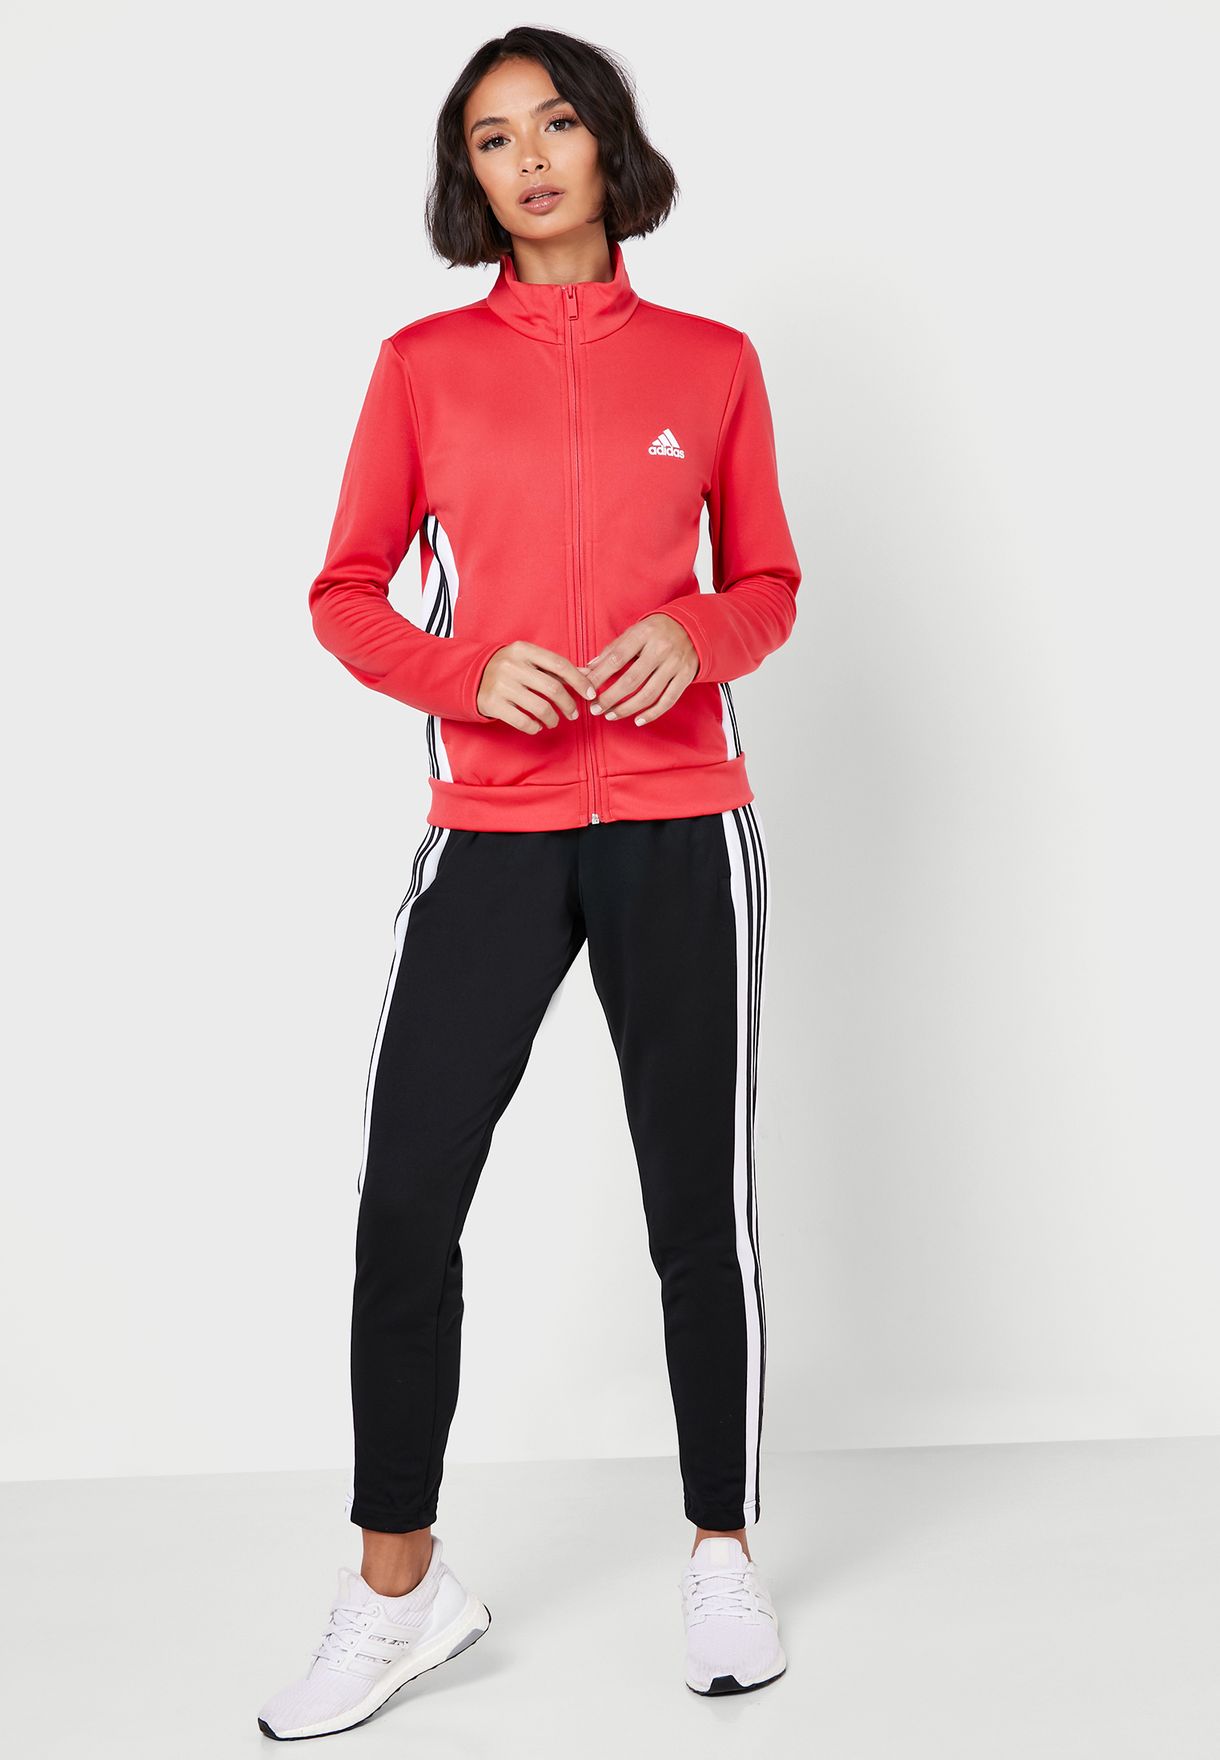 adidas team sports track suit